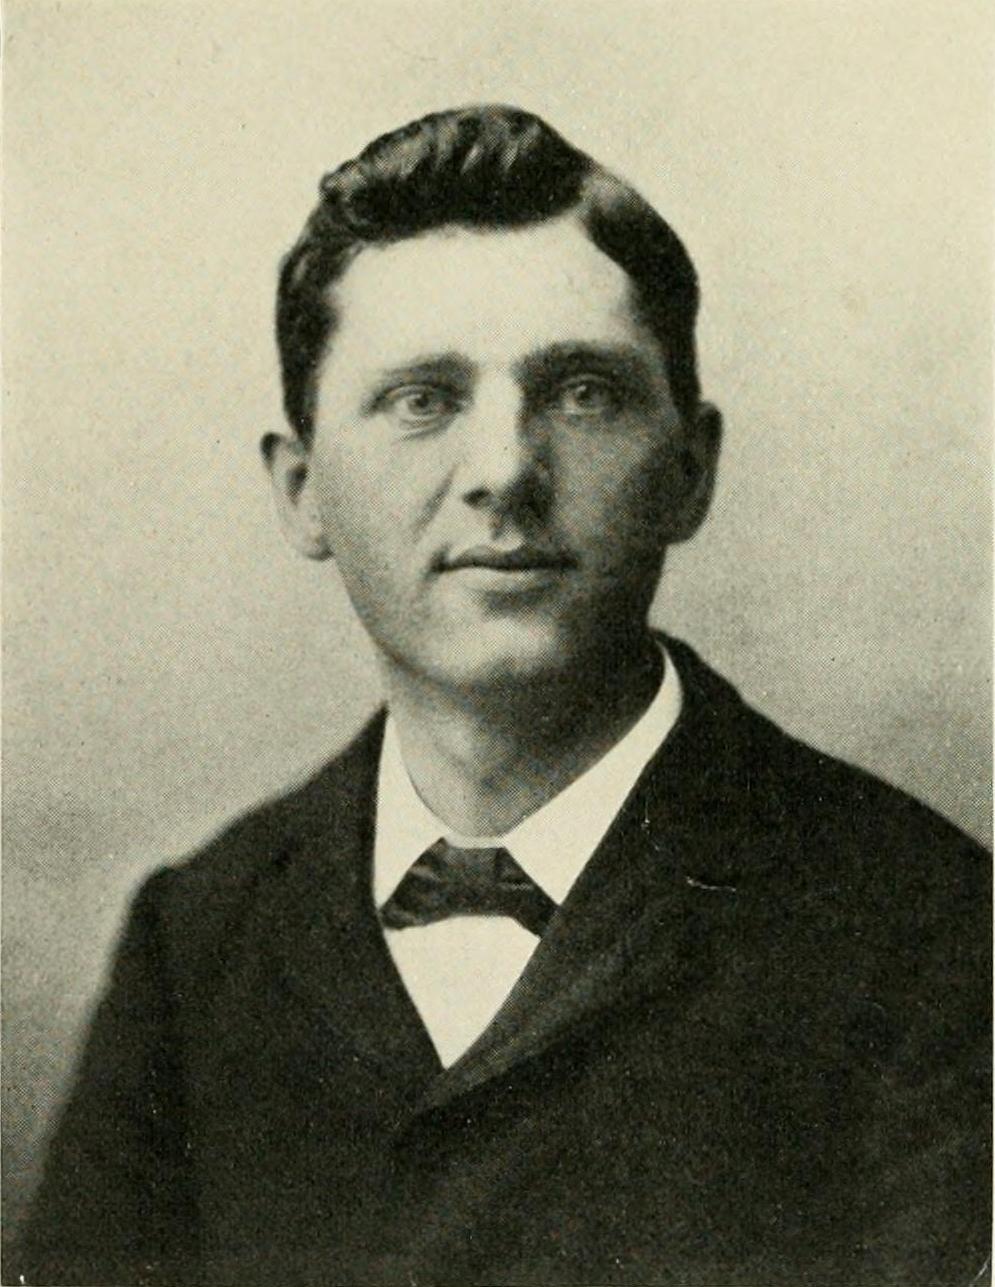 Image result for president william mckinley shot in 1901